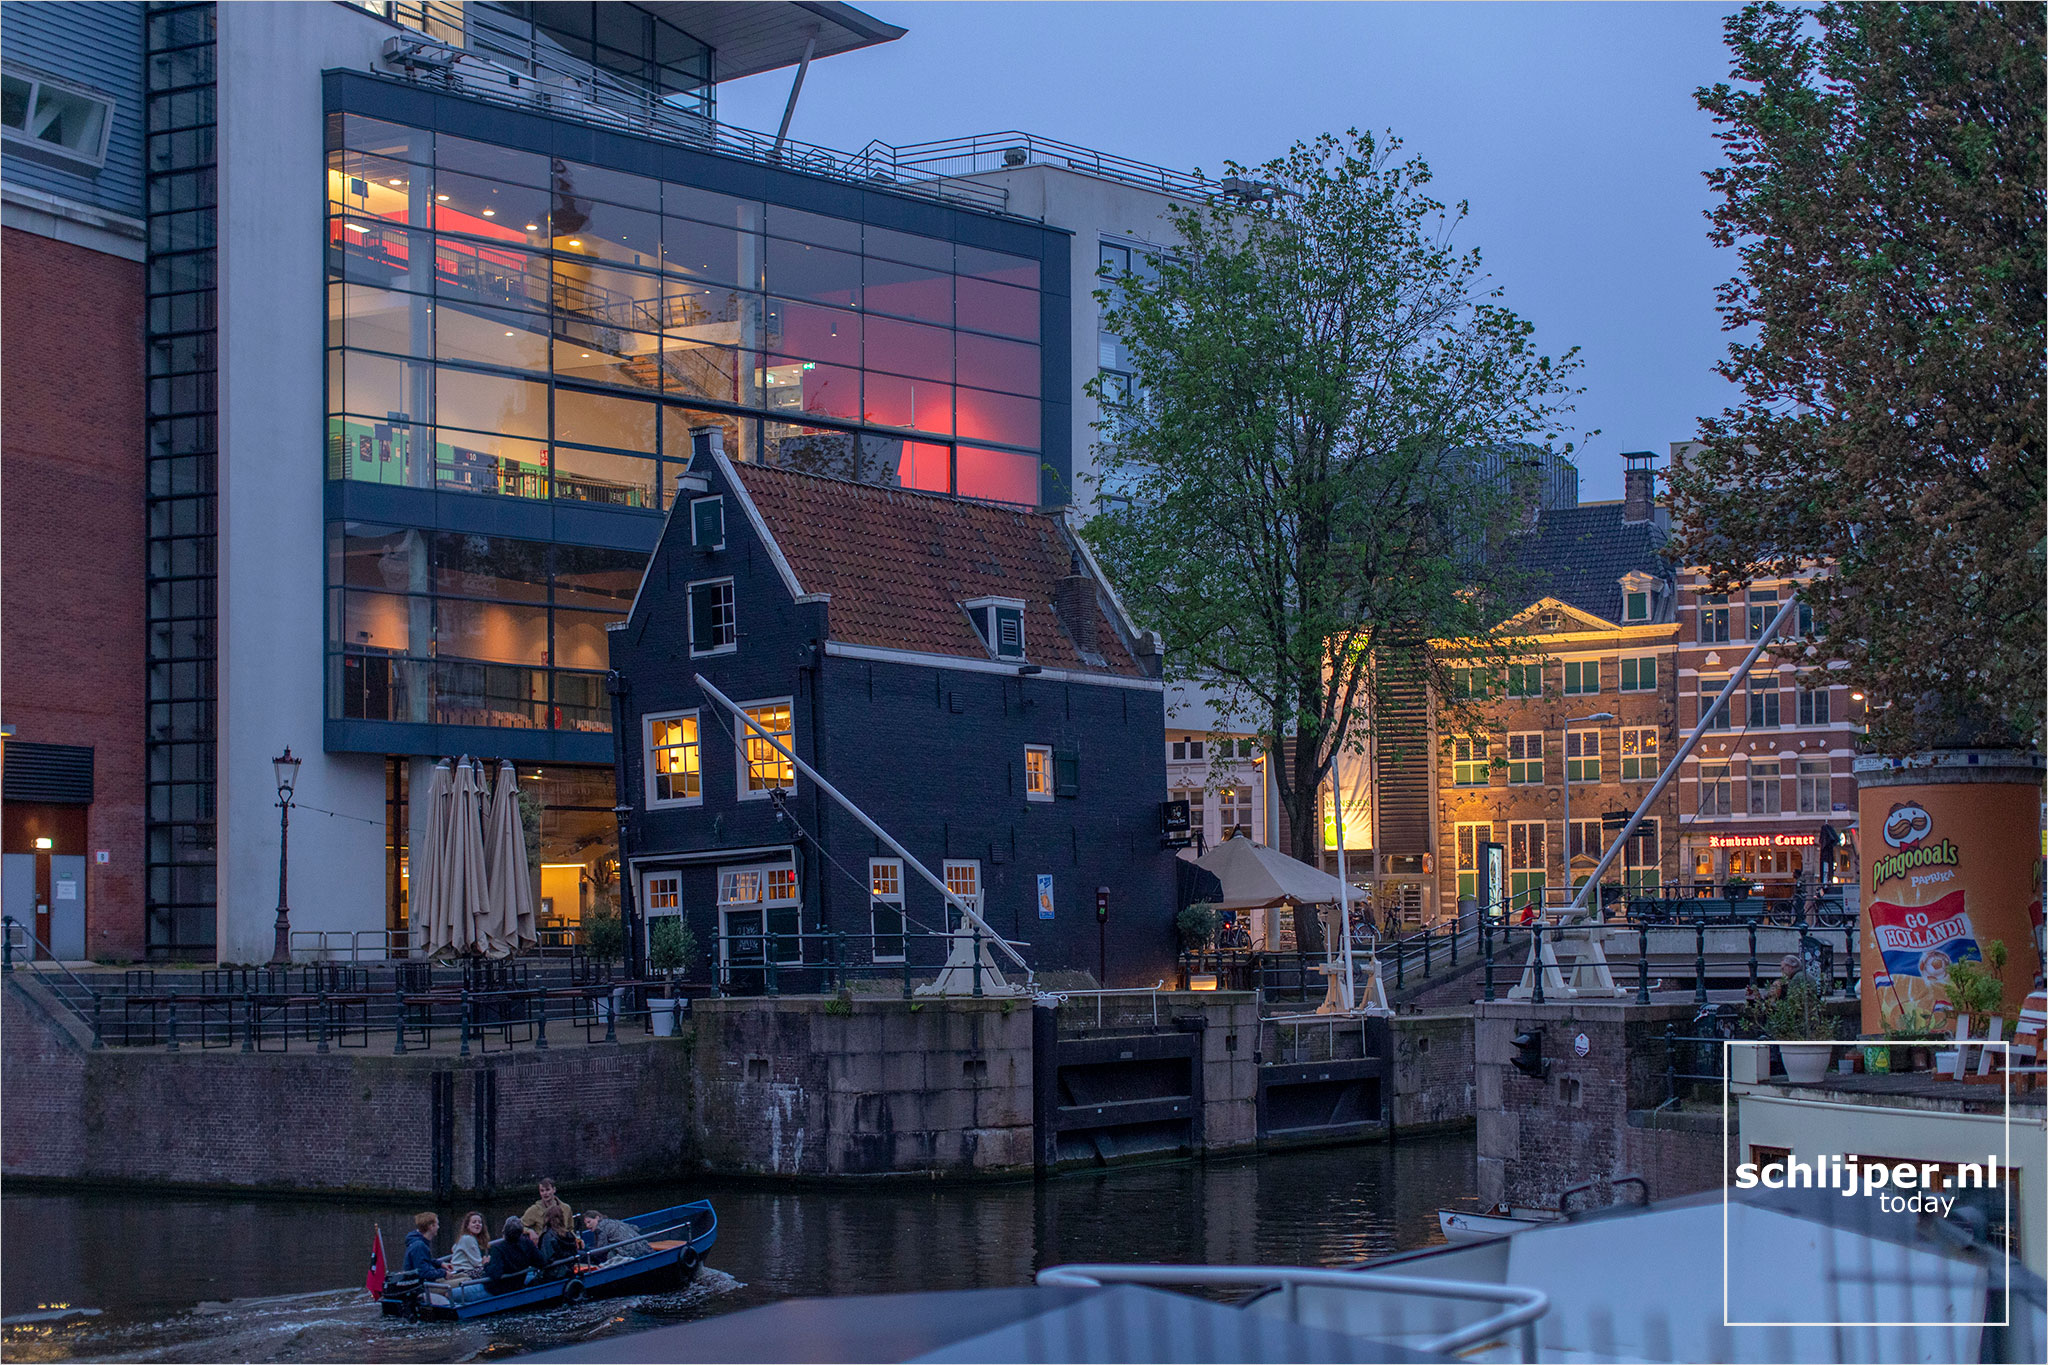 The Netherlands, Amsterdam 5 juni 2021